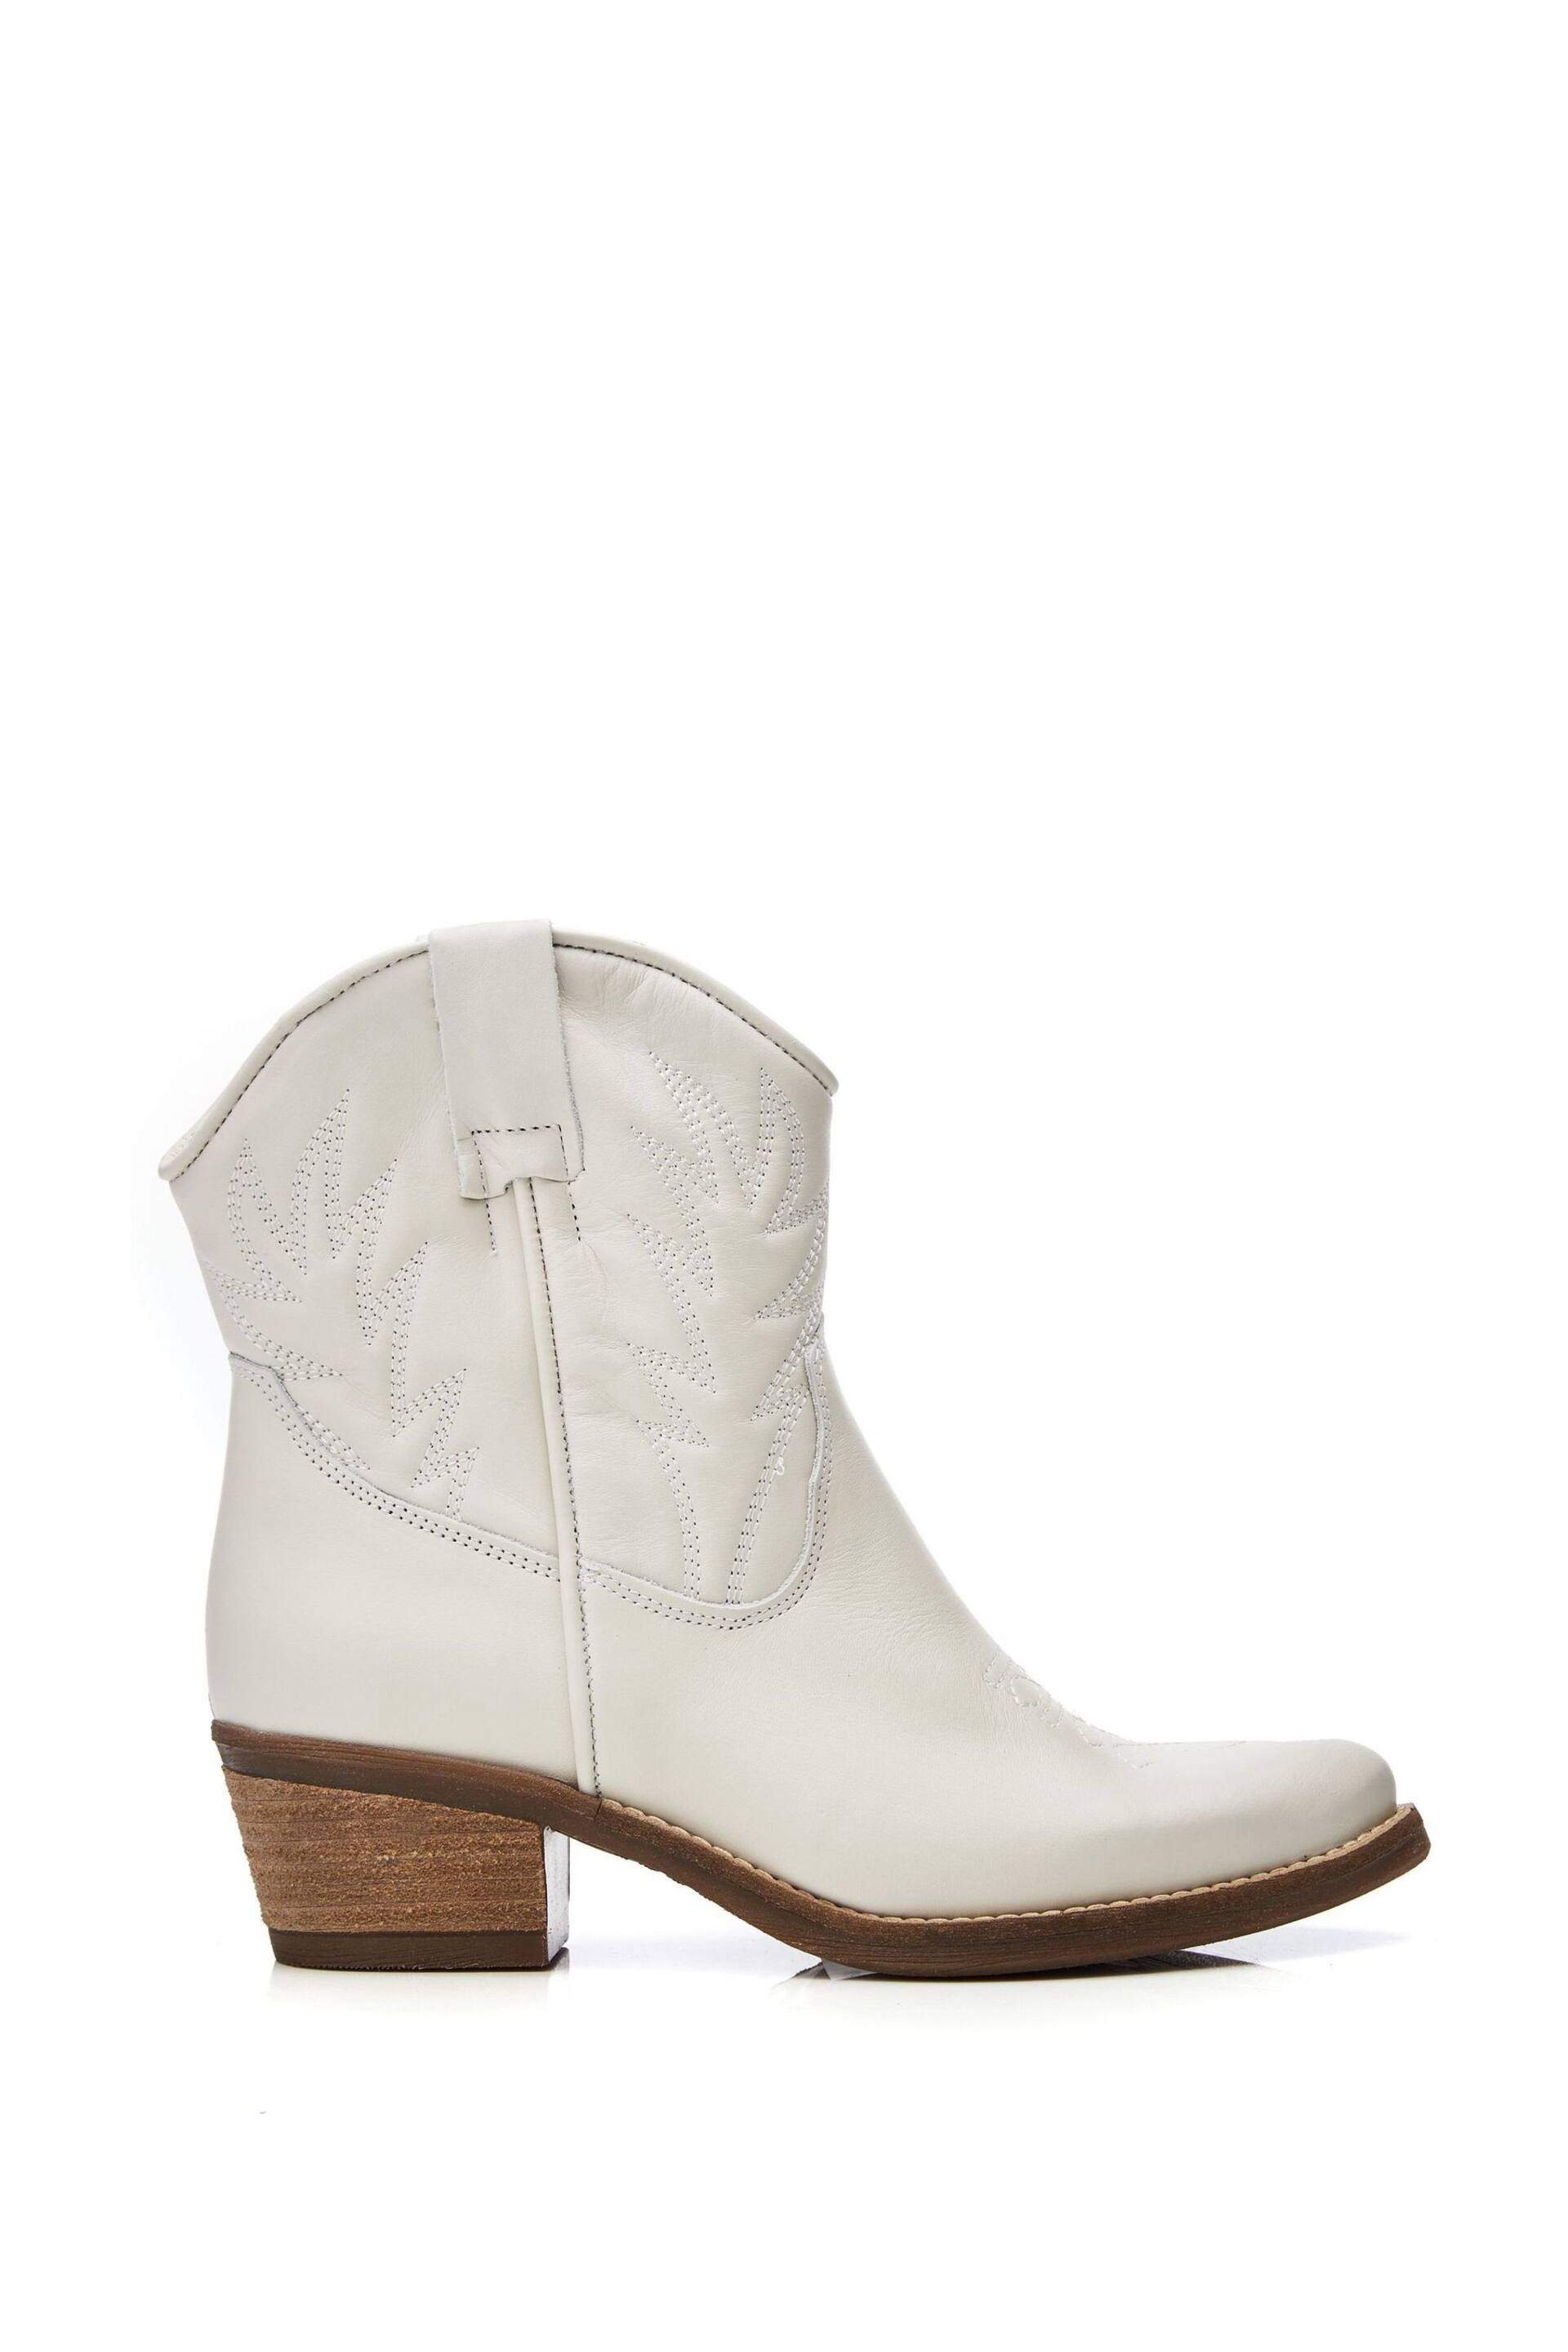 Moda in Pelle Bettsie Ankle Western White Boots - Image 2 of 5